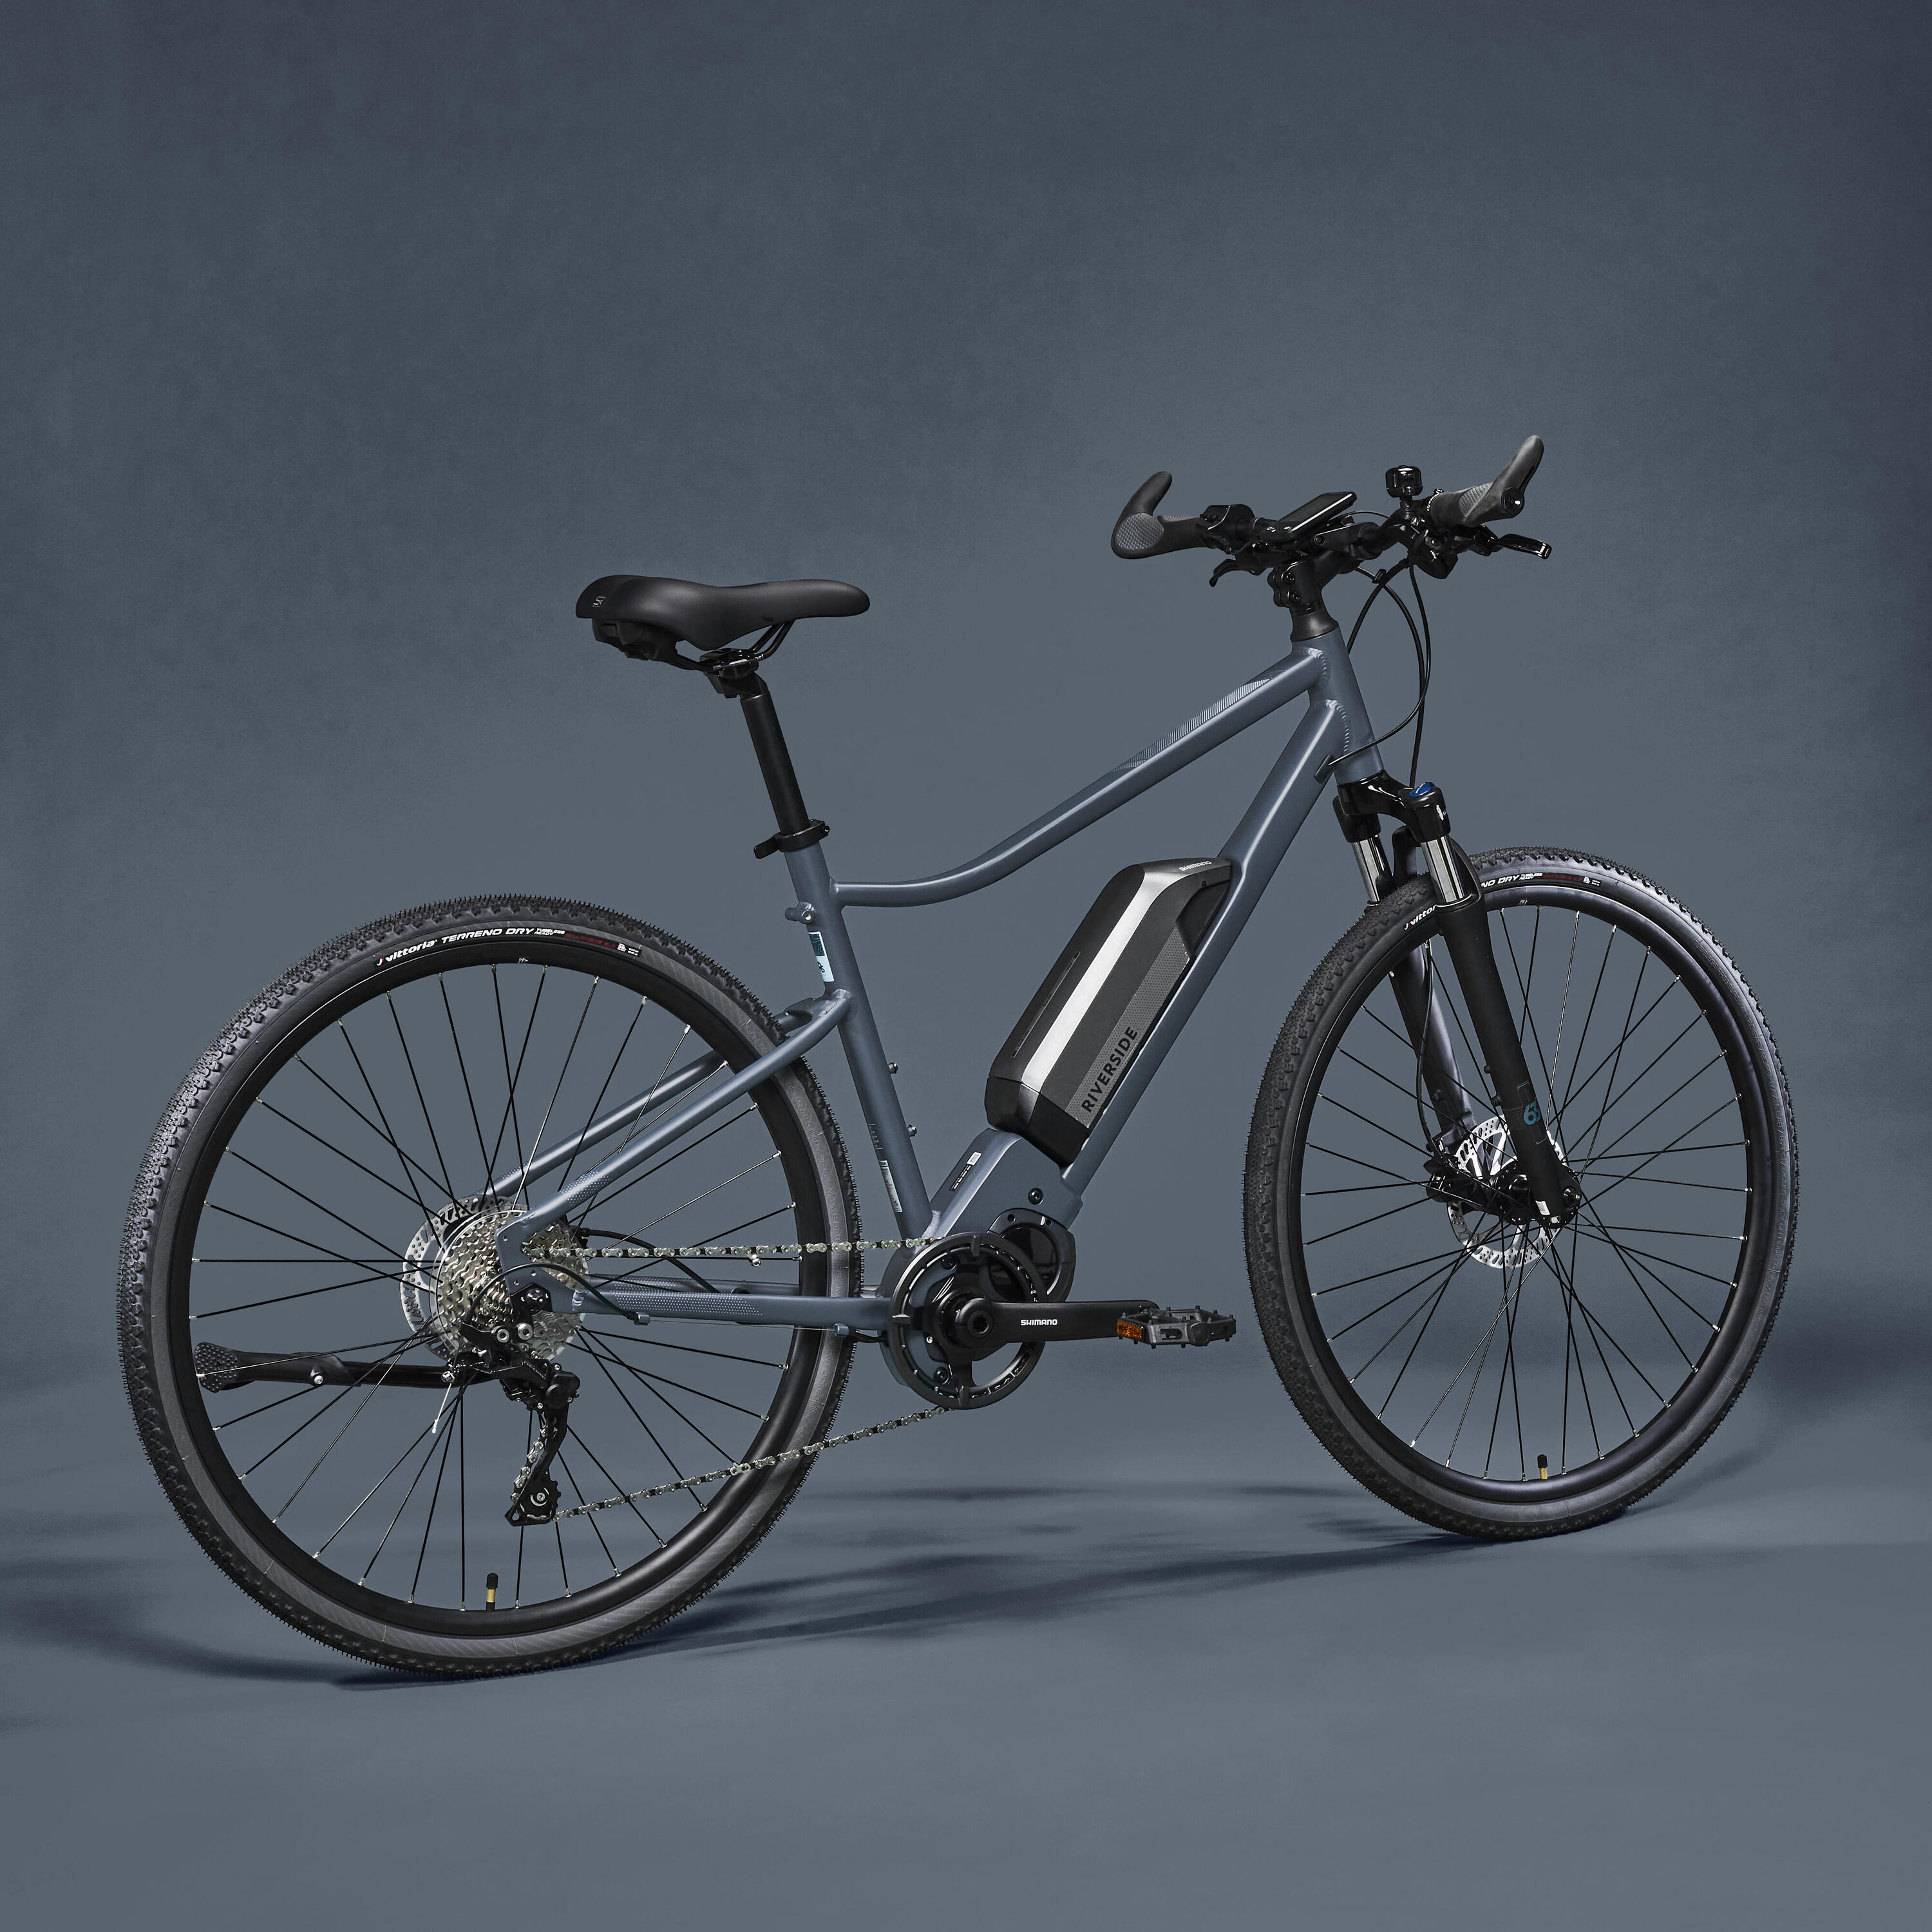 Shimano 60 Nm motor, long-distance electric hybrid bike, grey 5/23